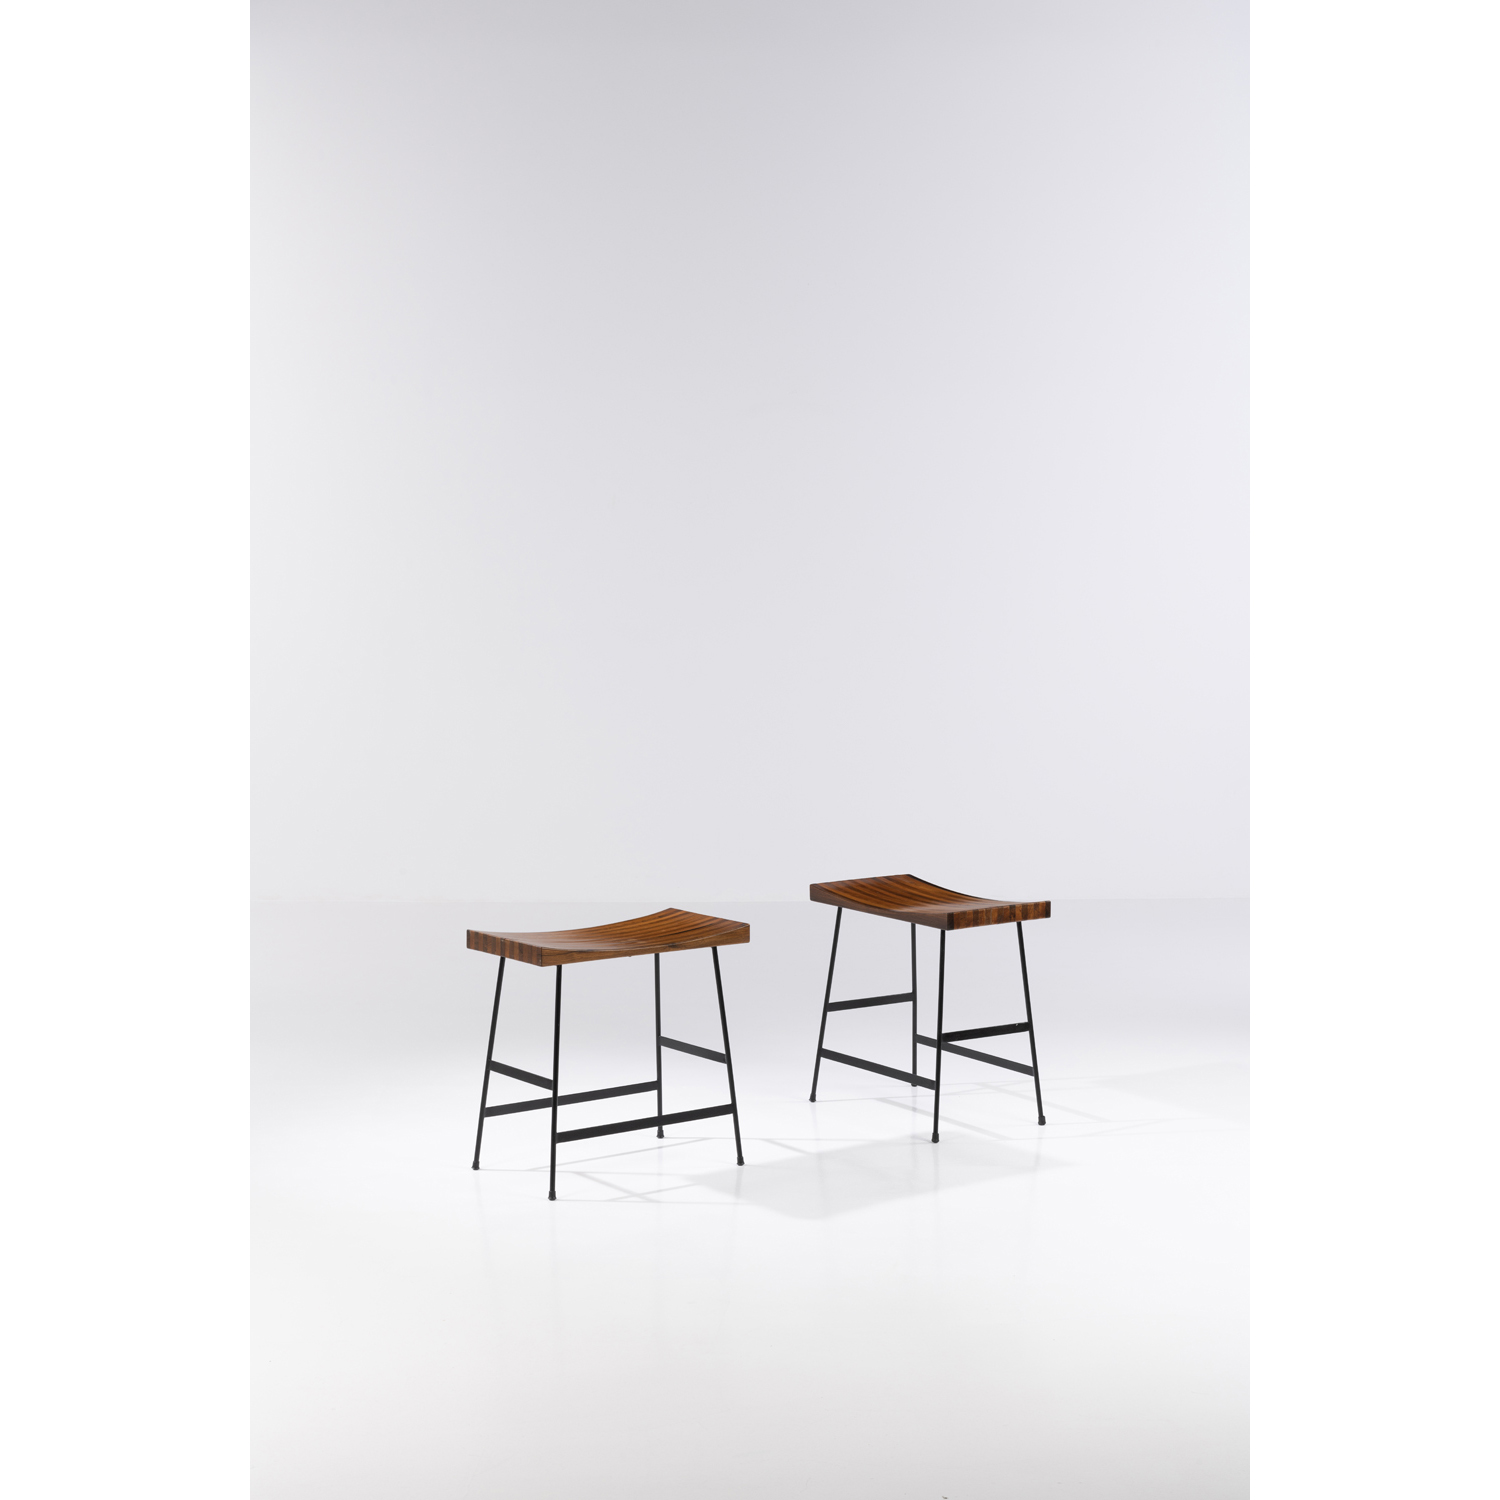 Joaquim Tenreiro (1906-1992) Pair of stools